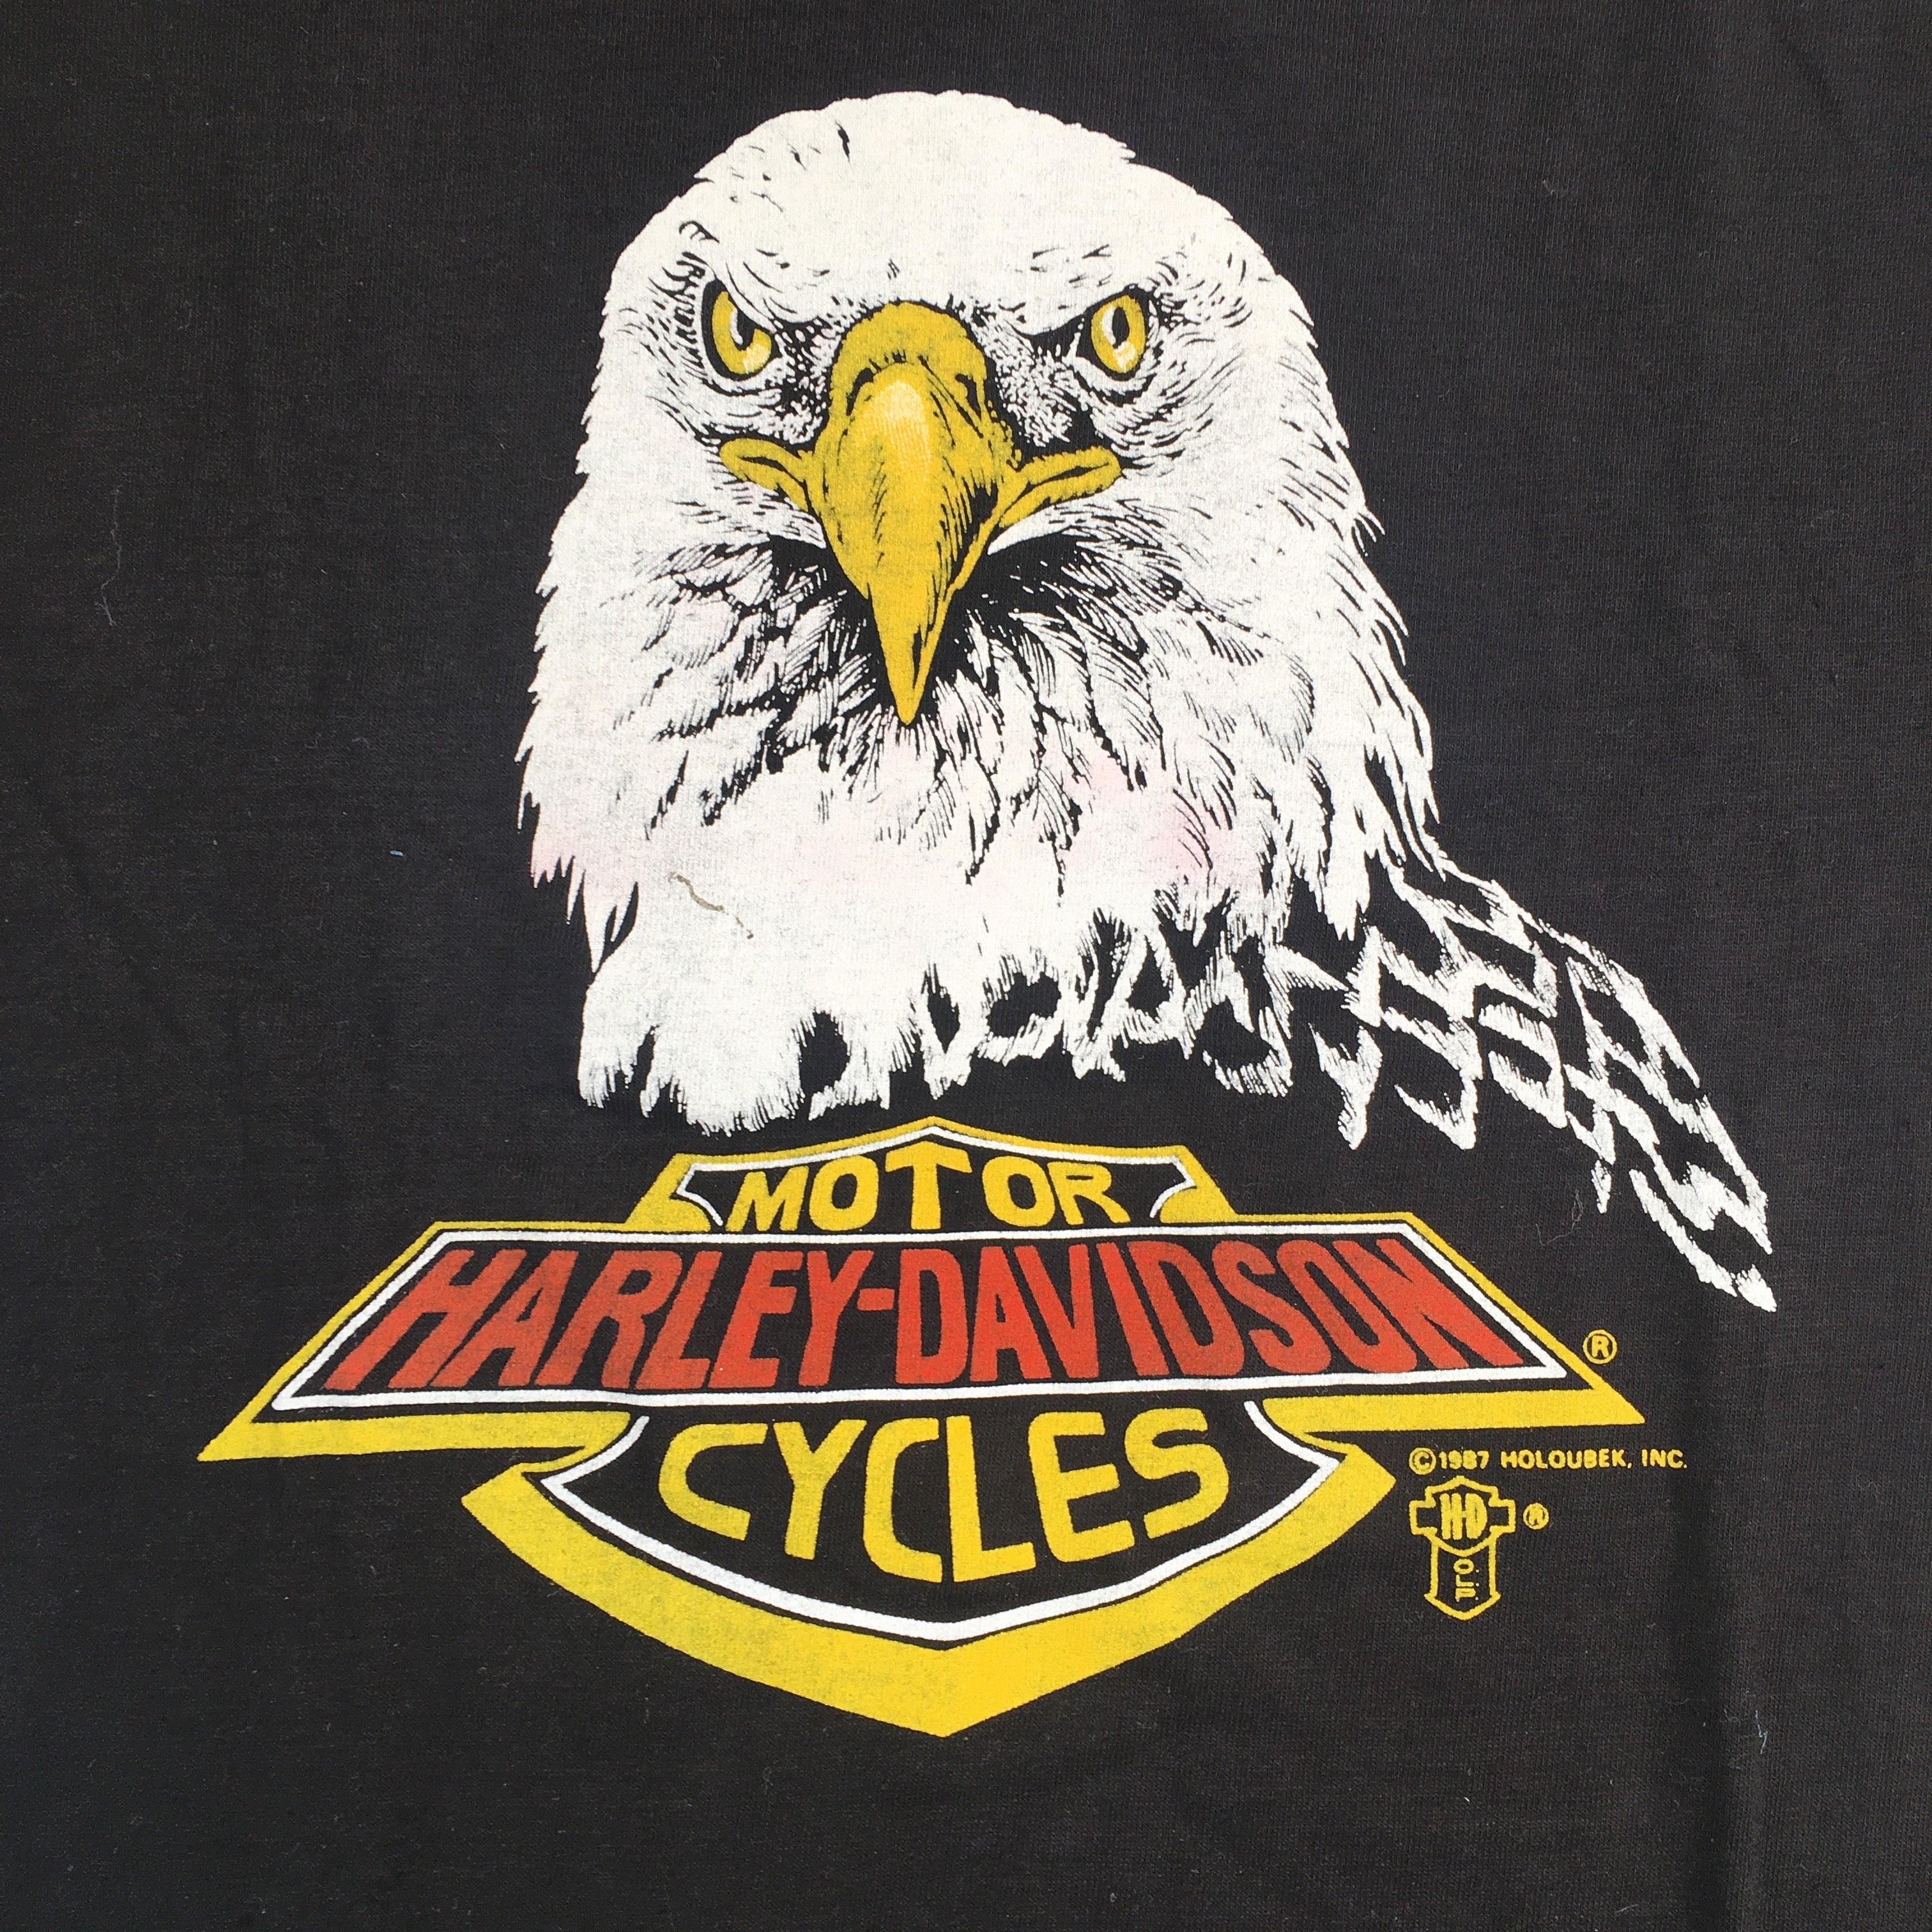 Retro Eagle Usa Flag Kentucky Vintage Louisville T-Shirt